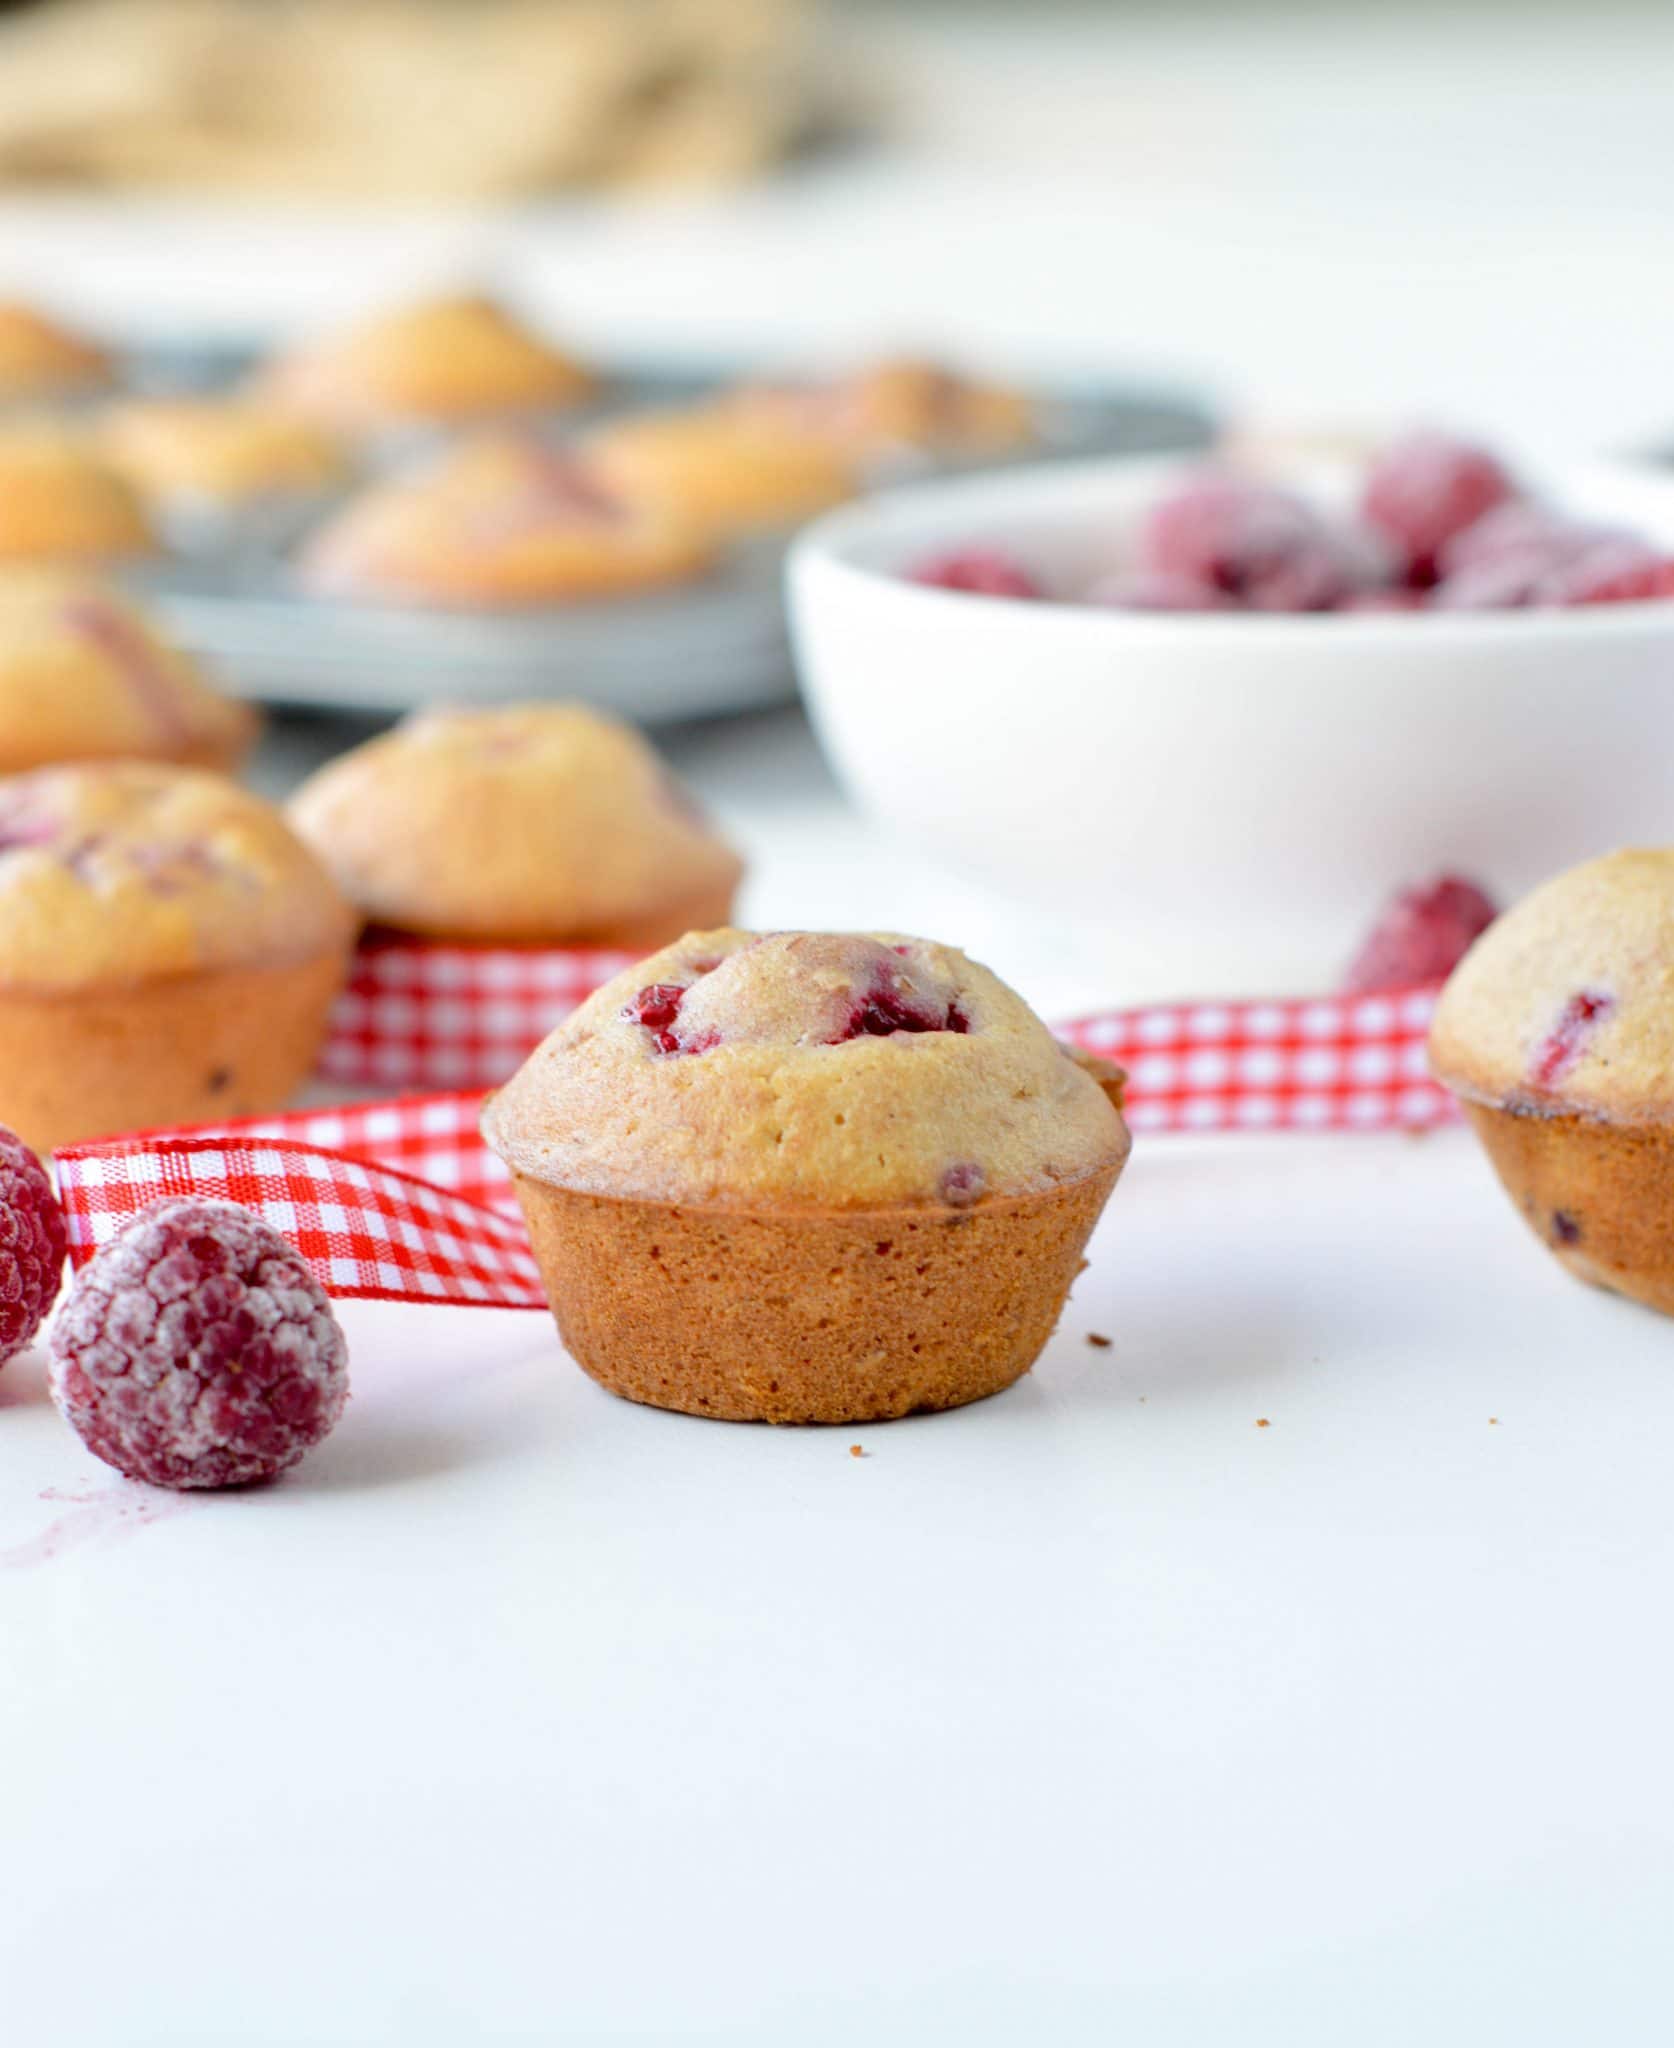 Keto raspberry muffins